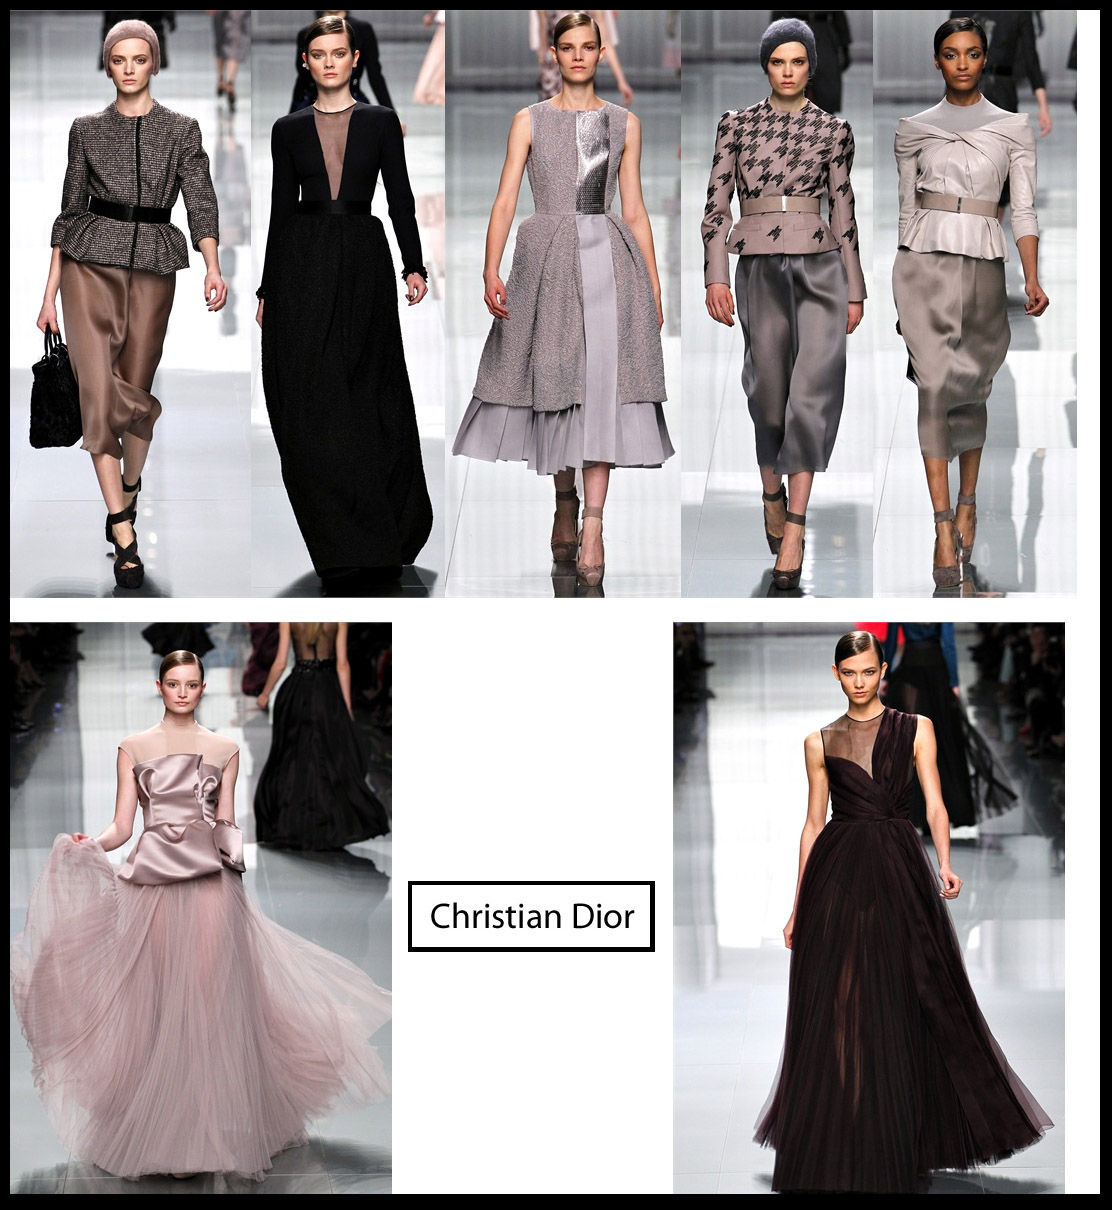 Paris Fashion Week 2012: Bill Gaytten e Dior sul viale del tramonto?